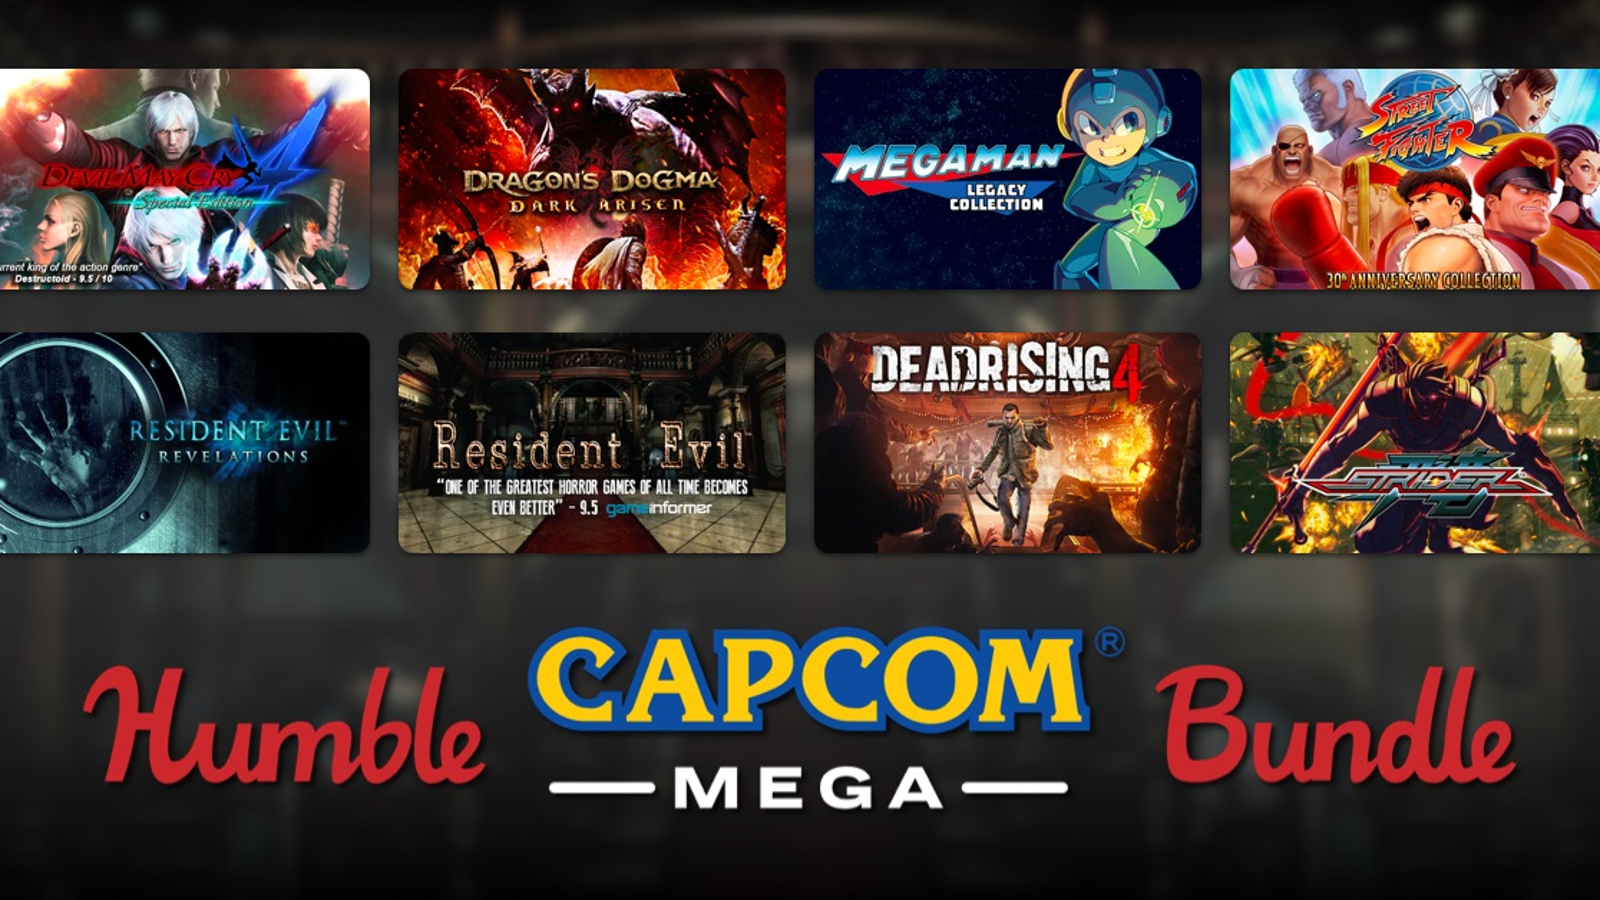 Humble Capcom Mega Bundle includes Resident Evil, Mega Dragon's Dogma and more